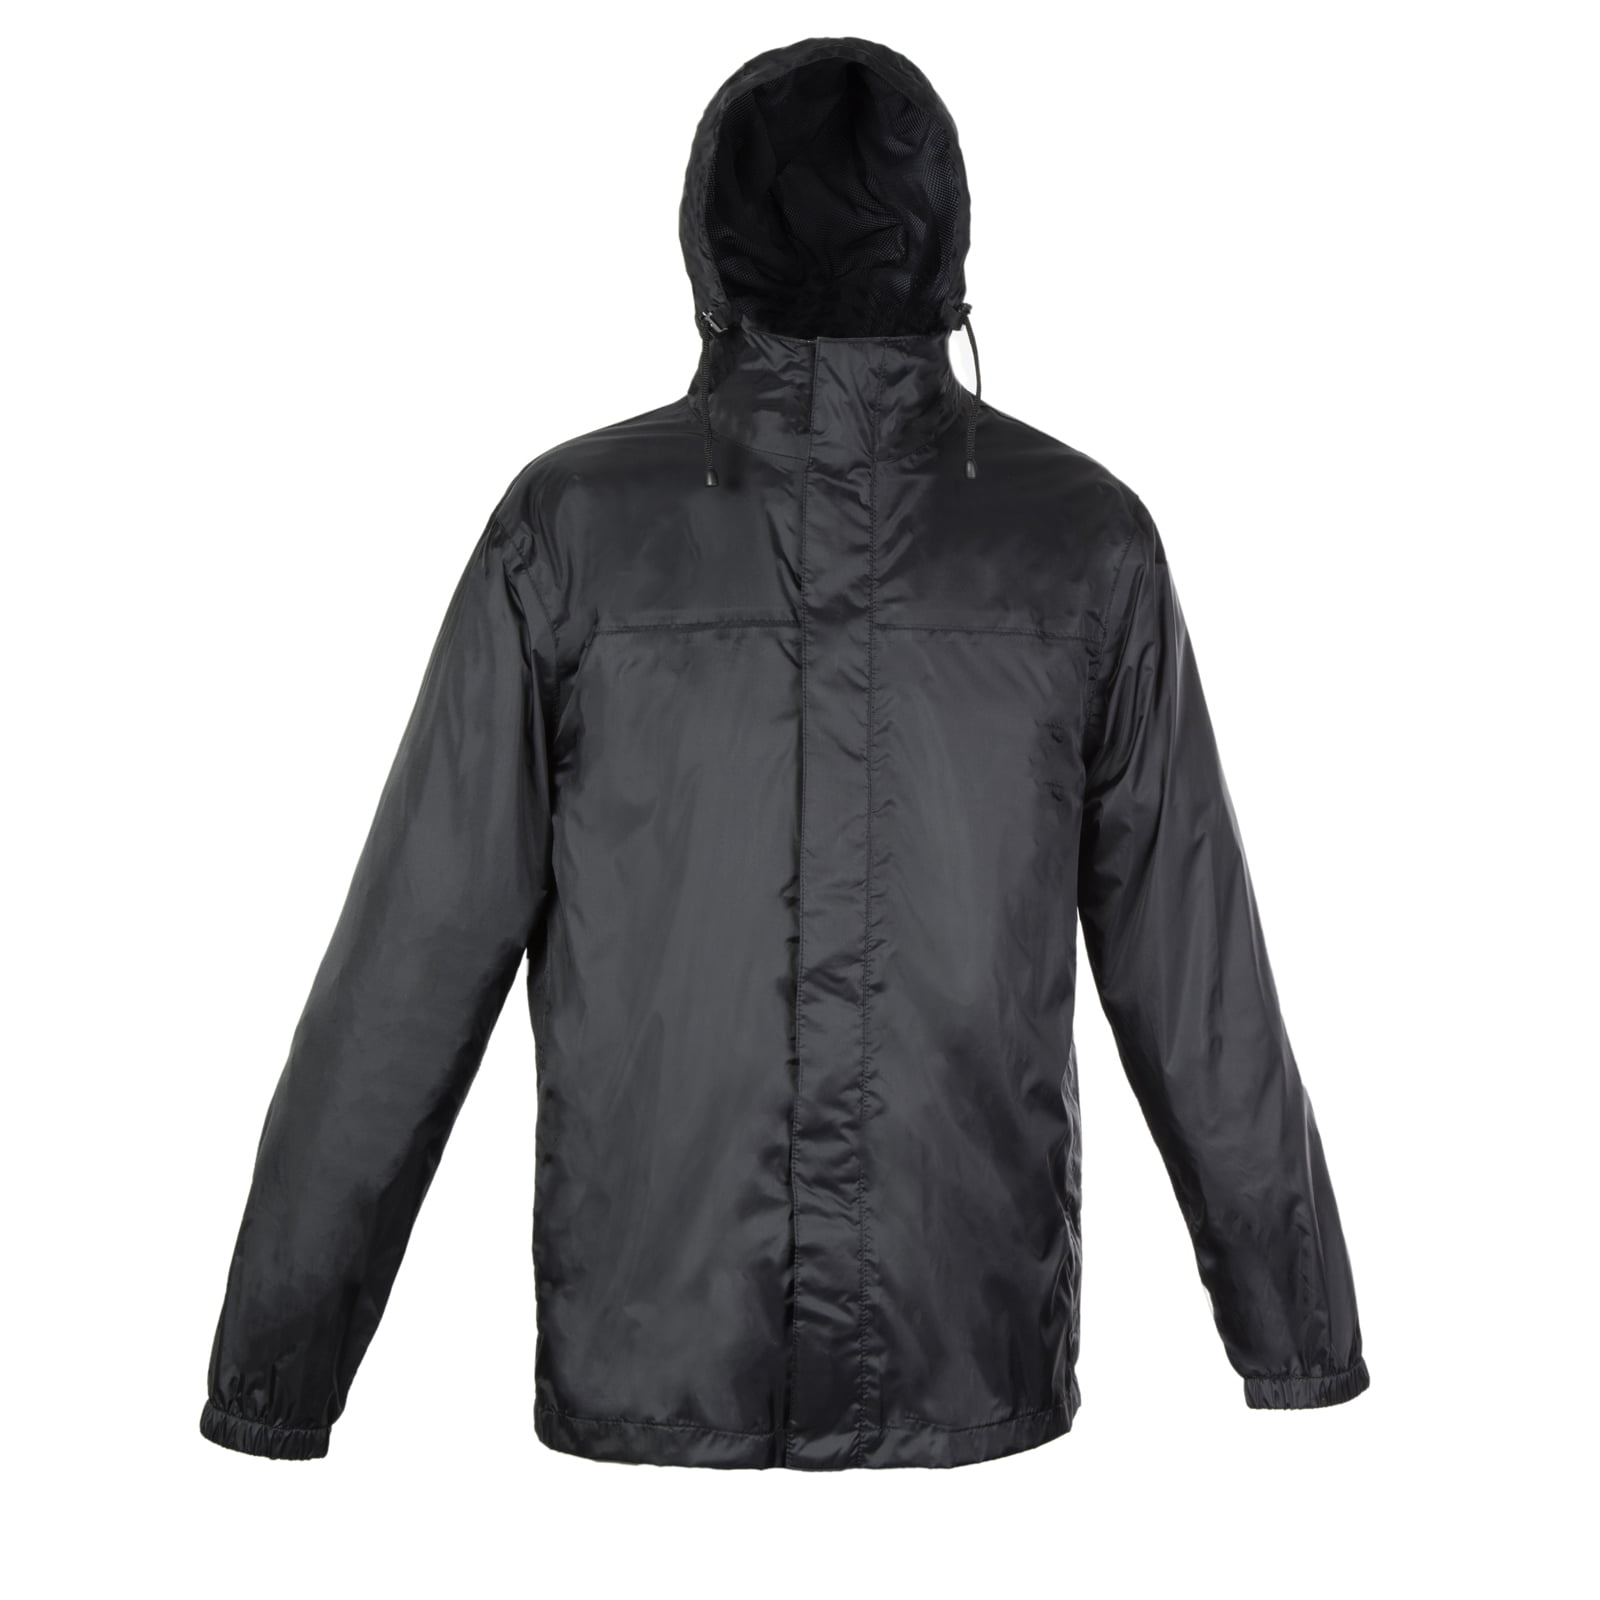 Mossi, 51-124-15, Mens Ultralight Rain Jacket - Black, Large - Walmart.com